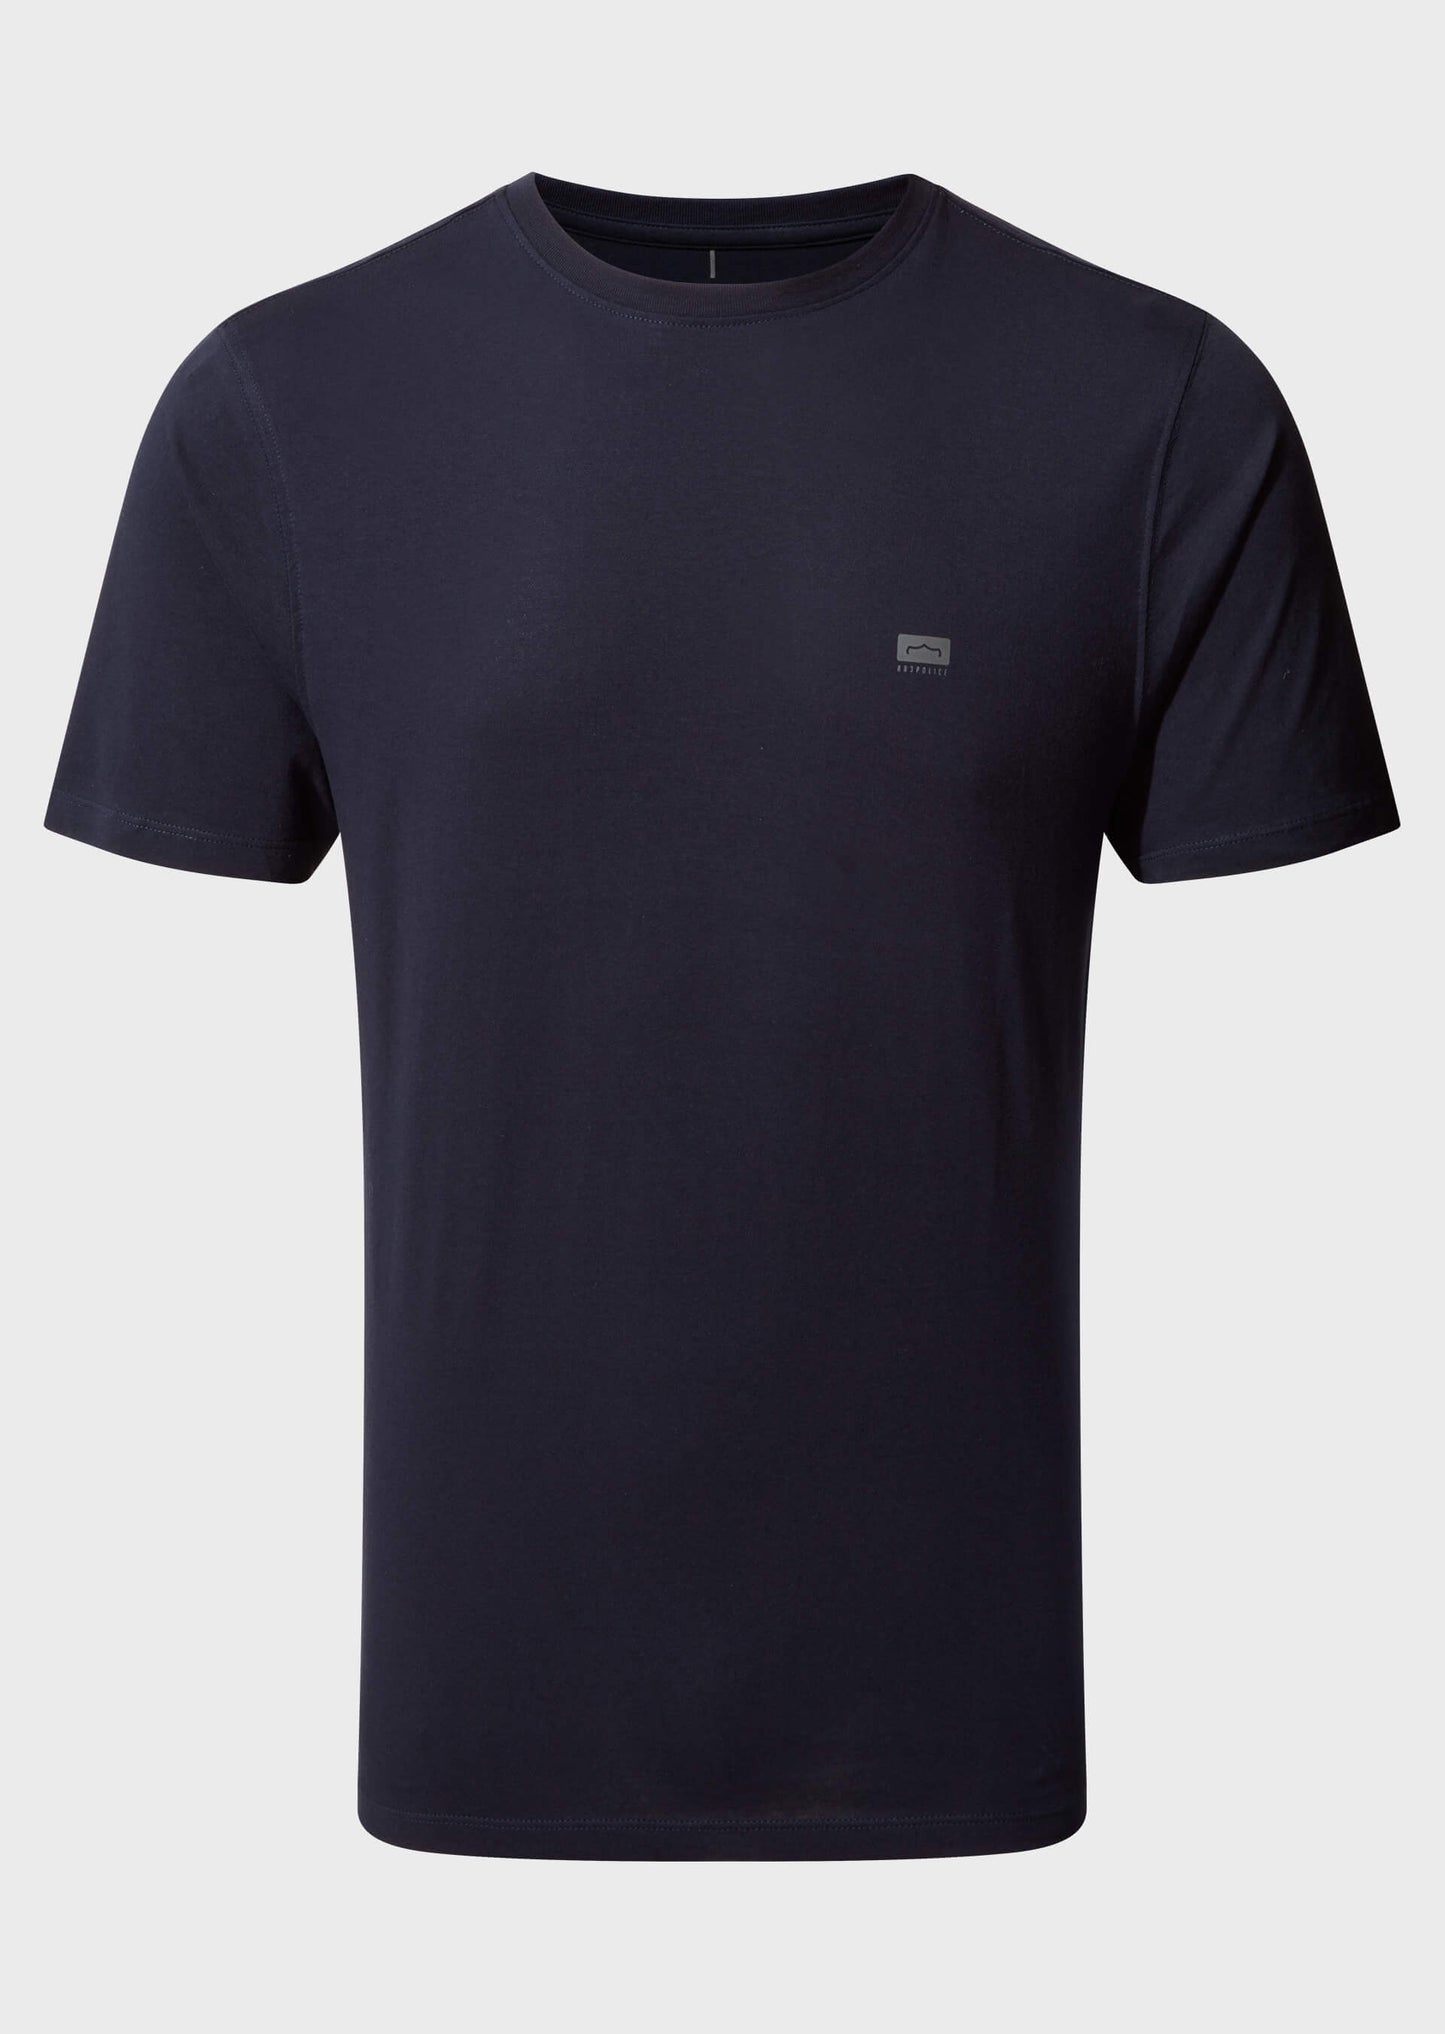 Takumi Basics Navy T Shirt